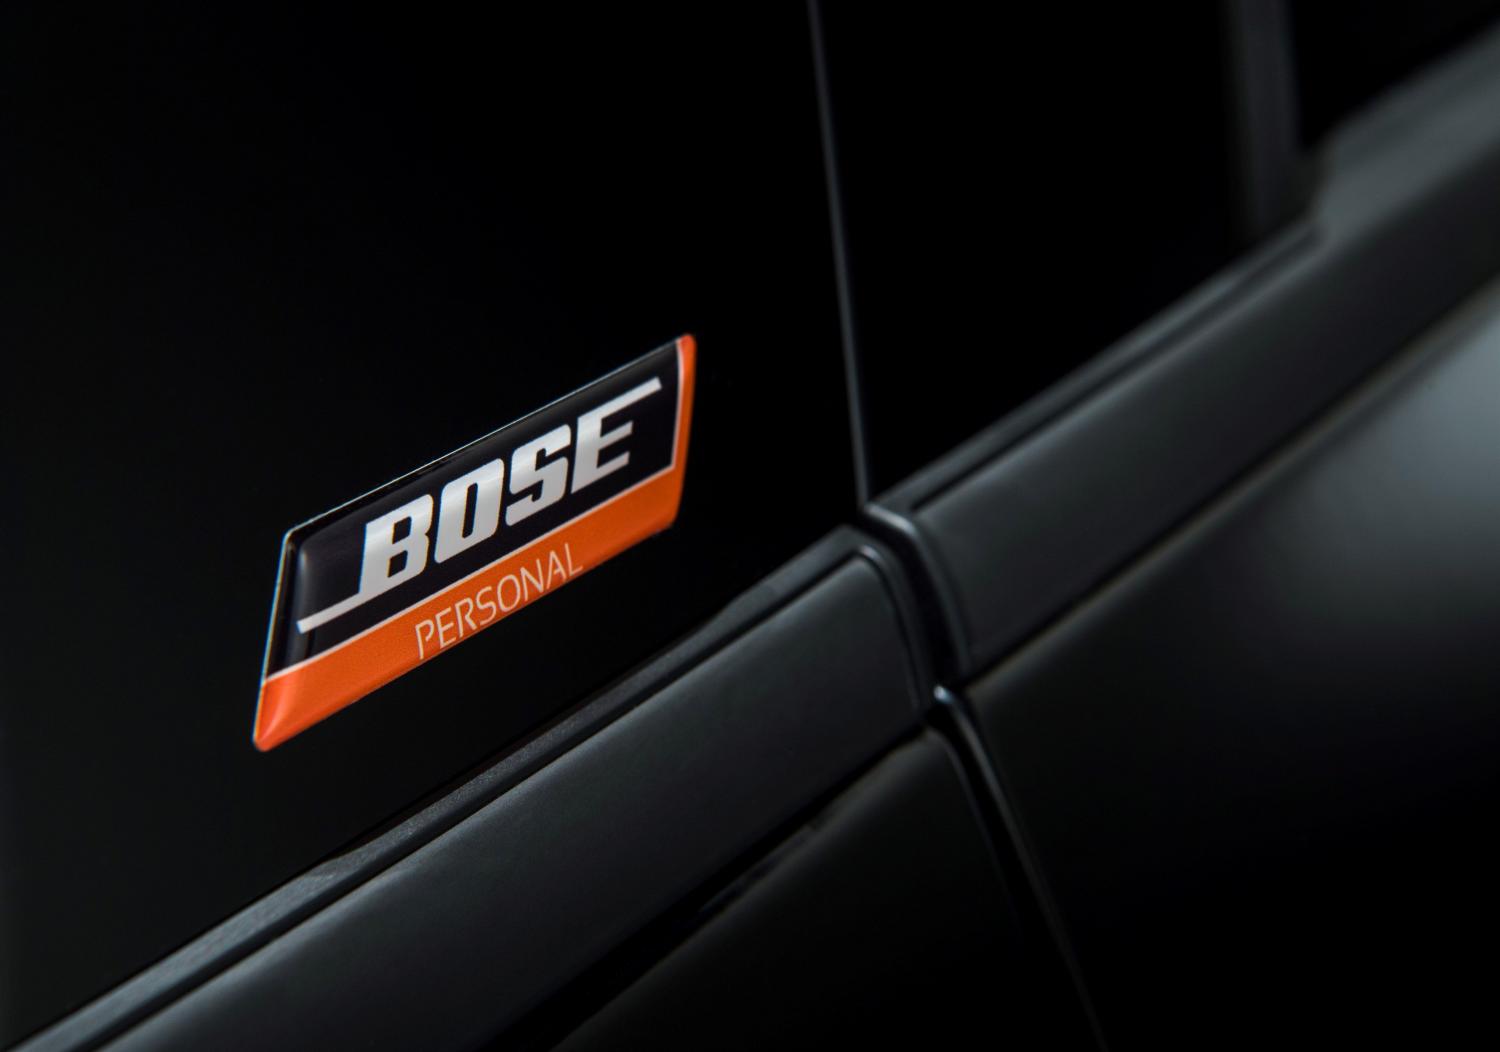 Ниссан bose. Bose Nissan. Bose Automotive. Эмблема Ниссан фото на экран монитора компьютера.